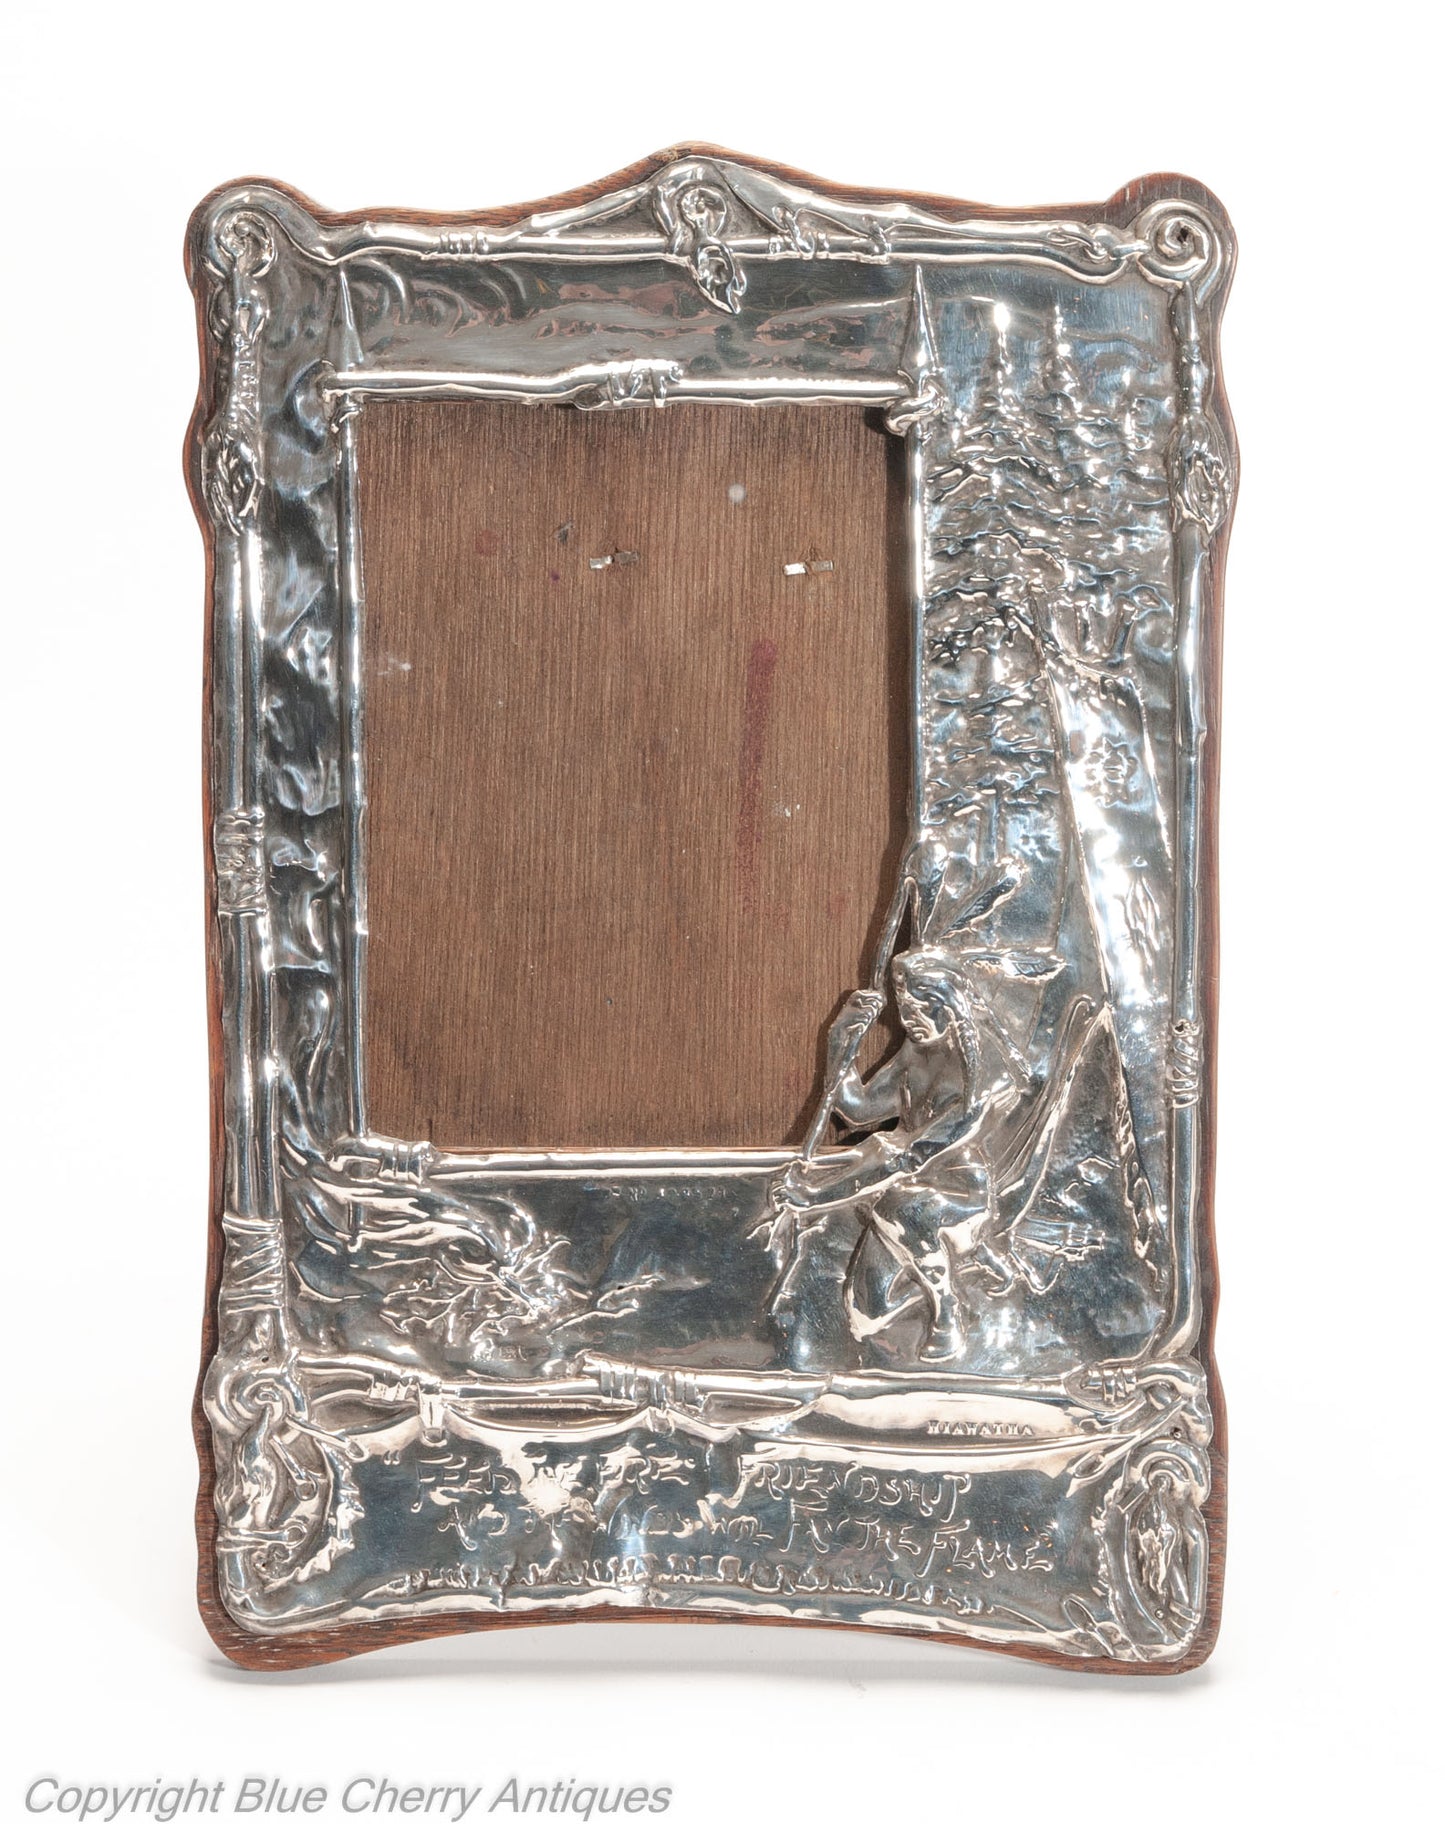 Antique Art Nouveau English Silver Easel Back Photo Frame with Hiawatha & Motto (Code 2032)